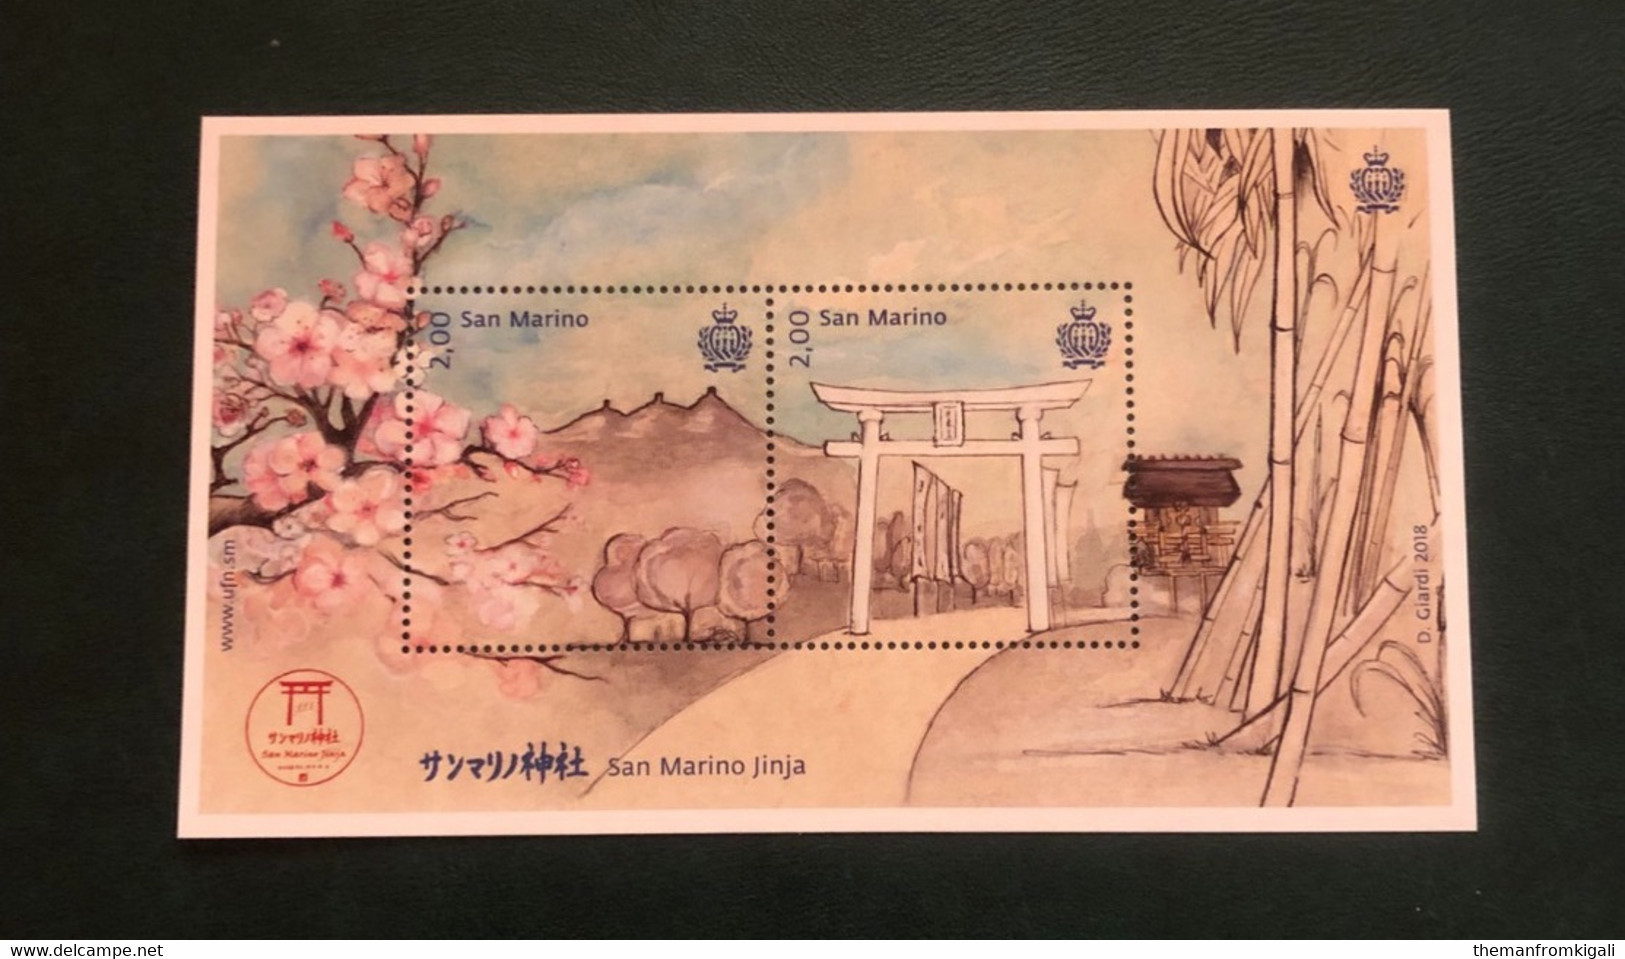 San Marino 2018 - Links With Japan -San Marino Jinja - Unused Stamps